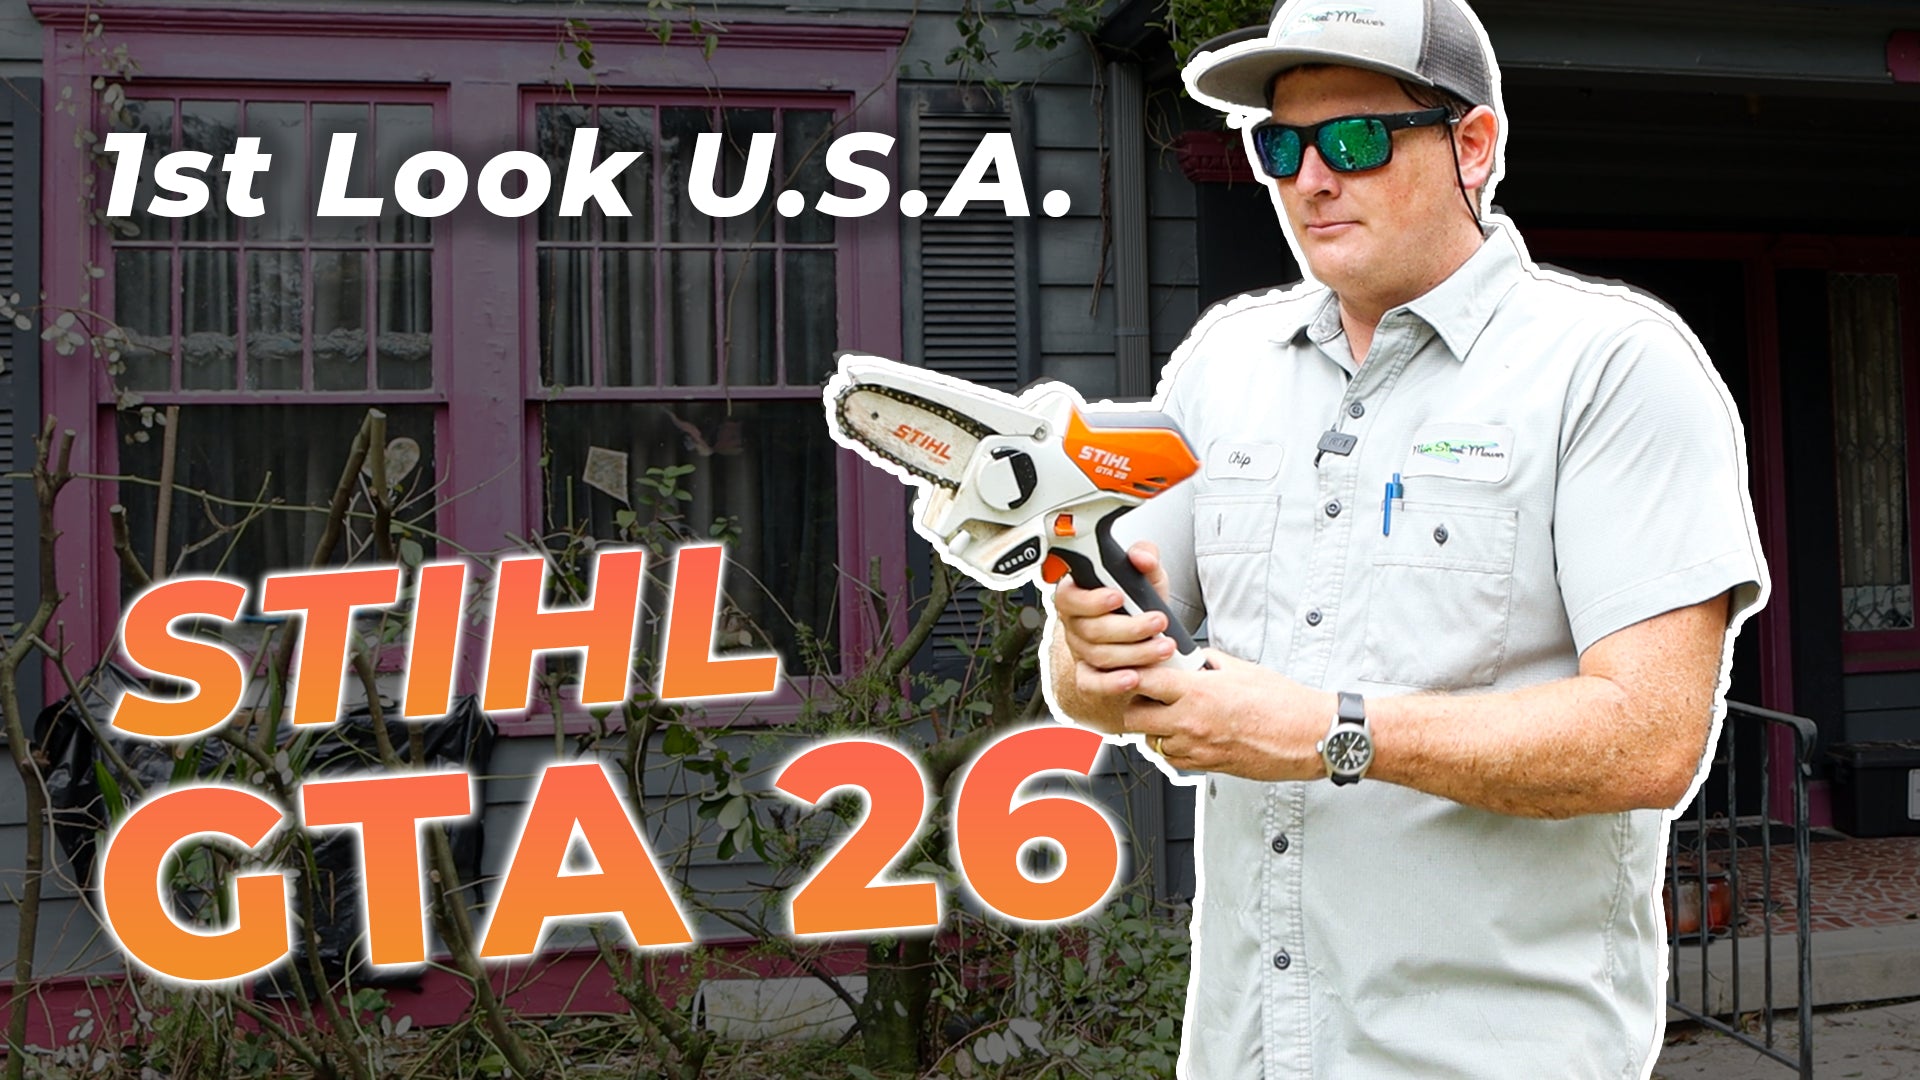 STIHL GTA 26 - Battery PRUNER/CHAINSAW - 1st Look USA!